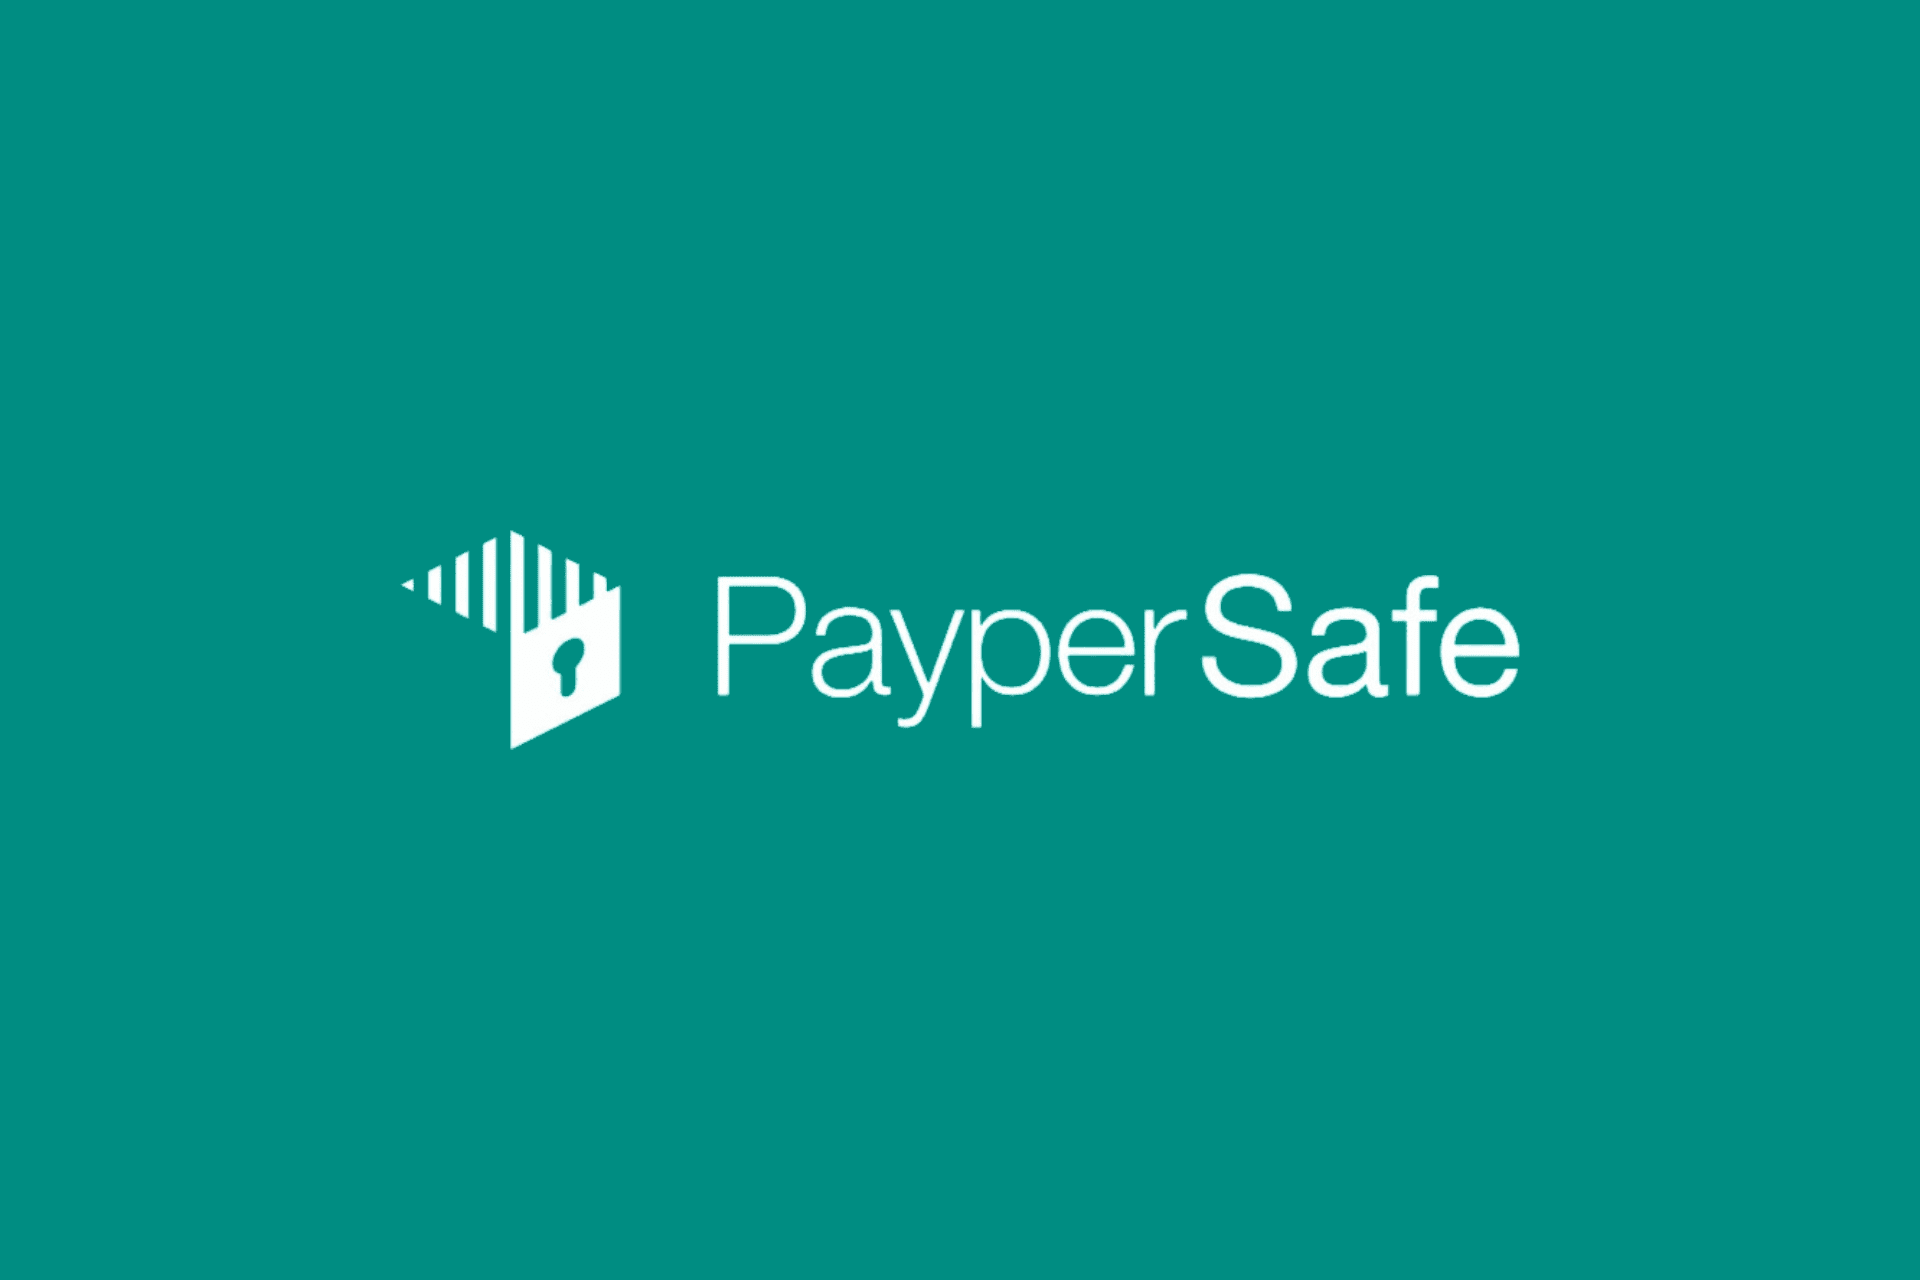 PayPerSafe